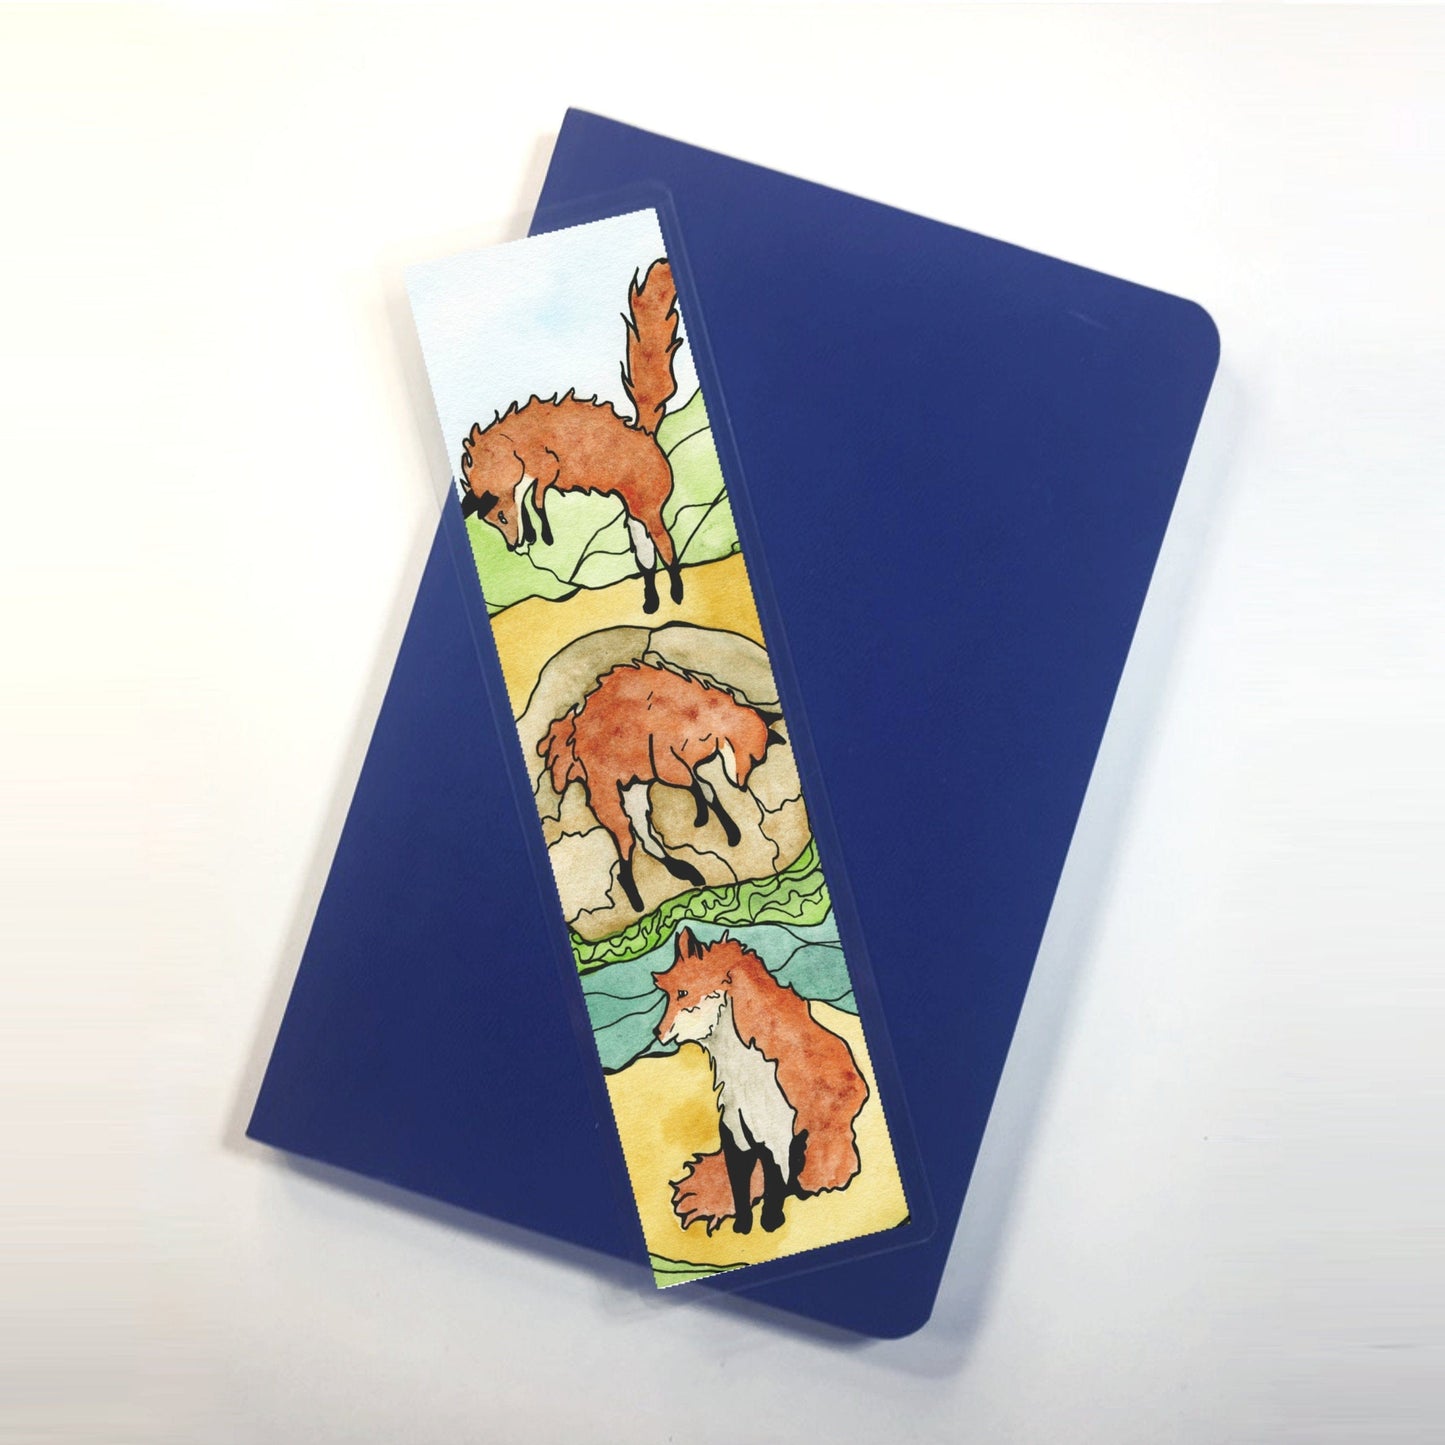 PinkPolish Design Bookmarks "Frolic", 2-Sided Bookmark